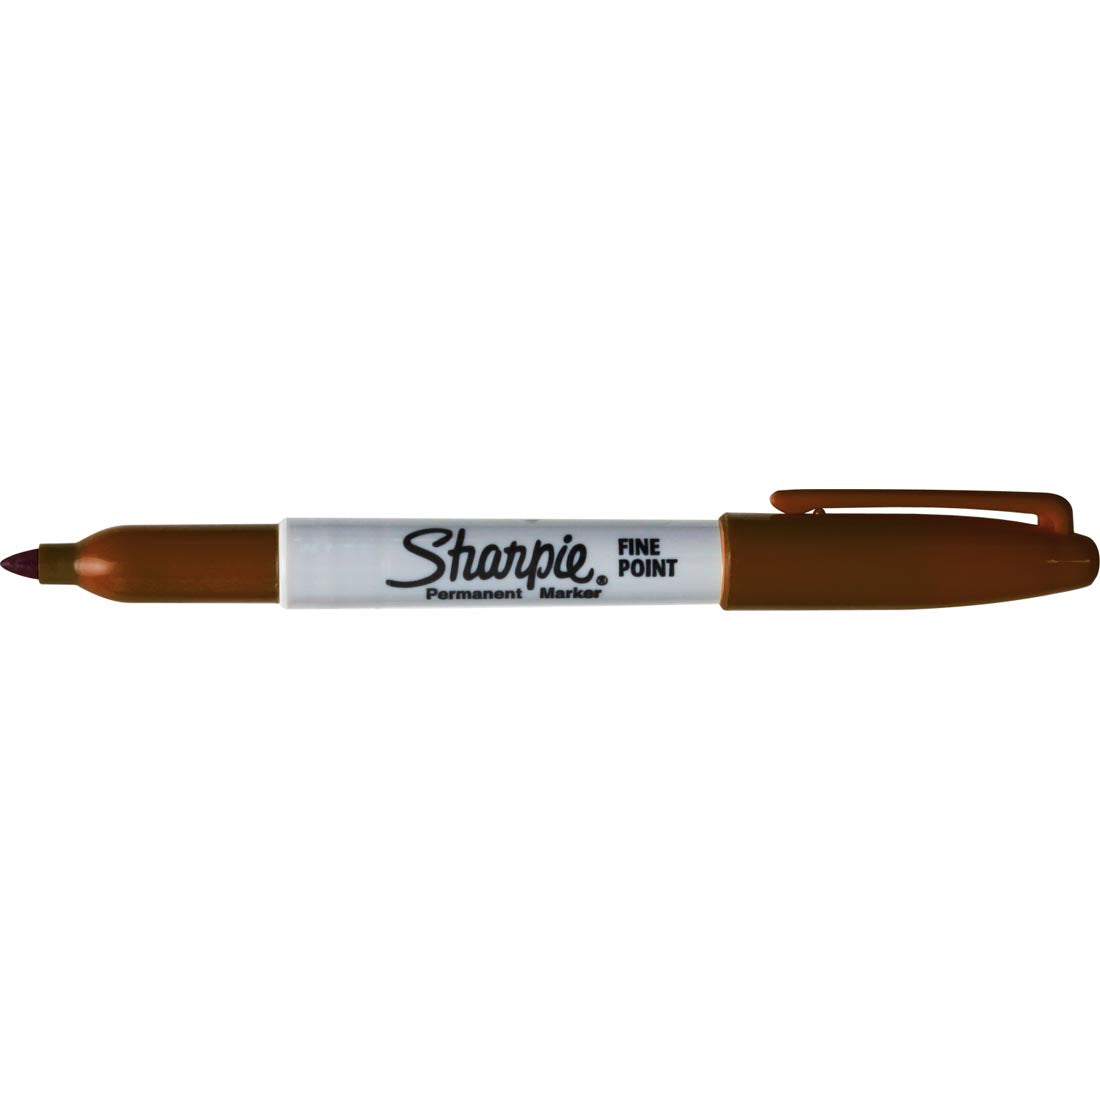 Sharpie • Fine Point • Permanent Markers • Colors - Brown by Sharpie - K. A. Artist Shop